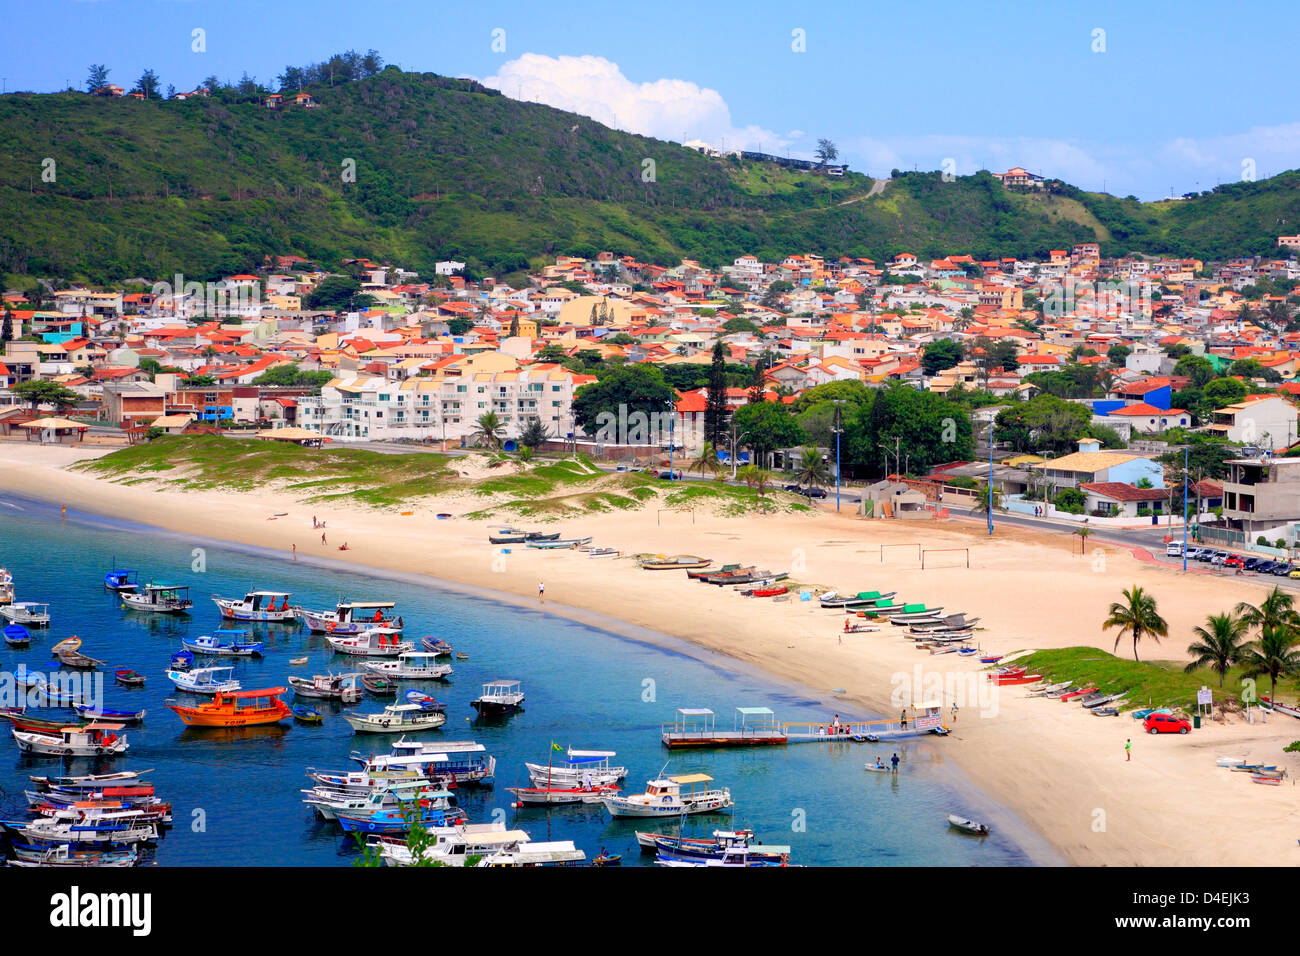 Arraial do Cabo city and beach. Rio de janeiro state, Brazil Stock Photo